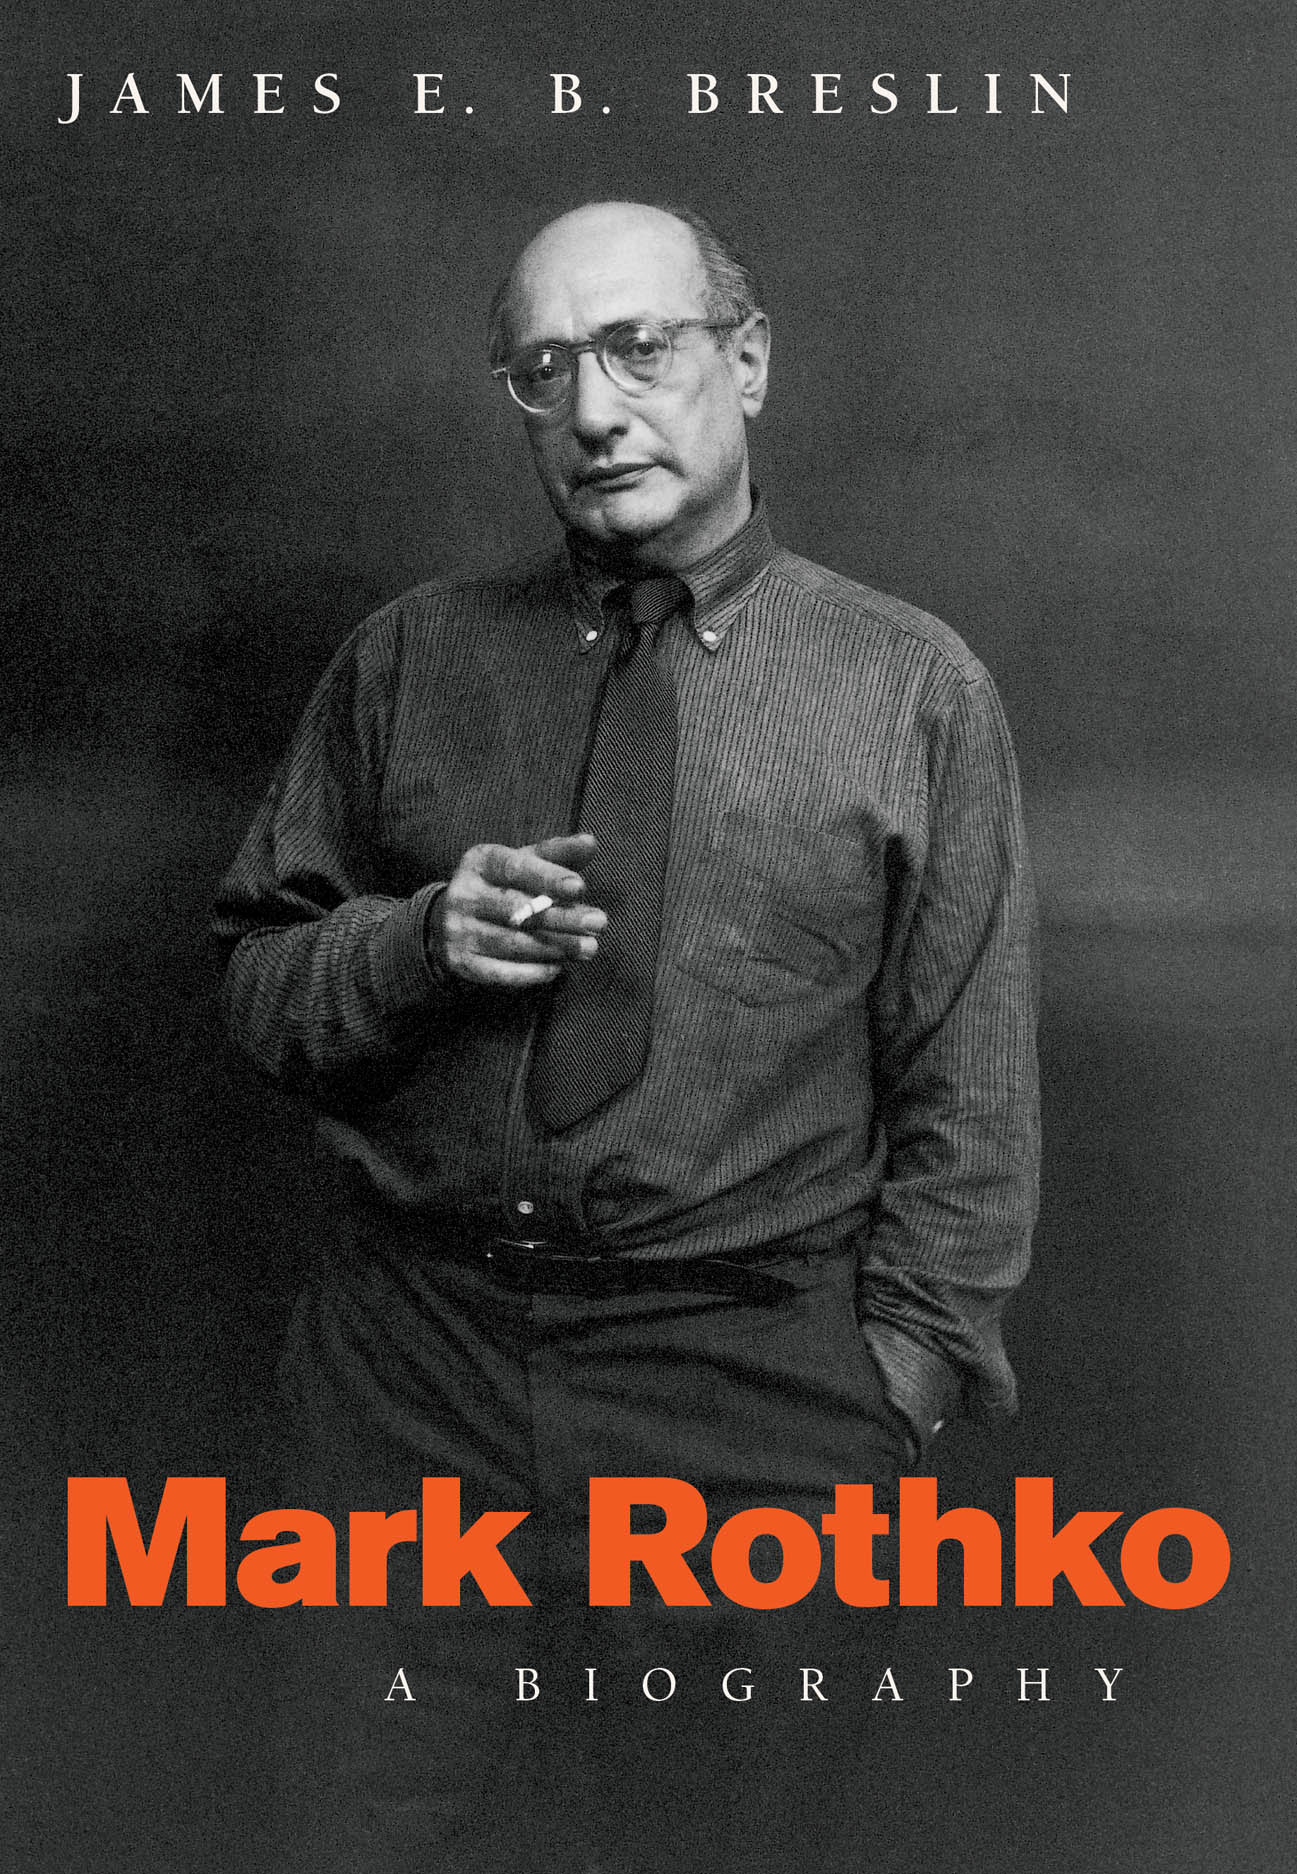 Review of Mark Rothko